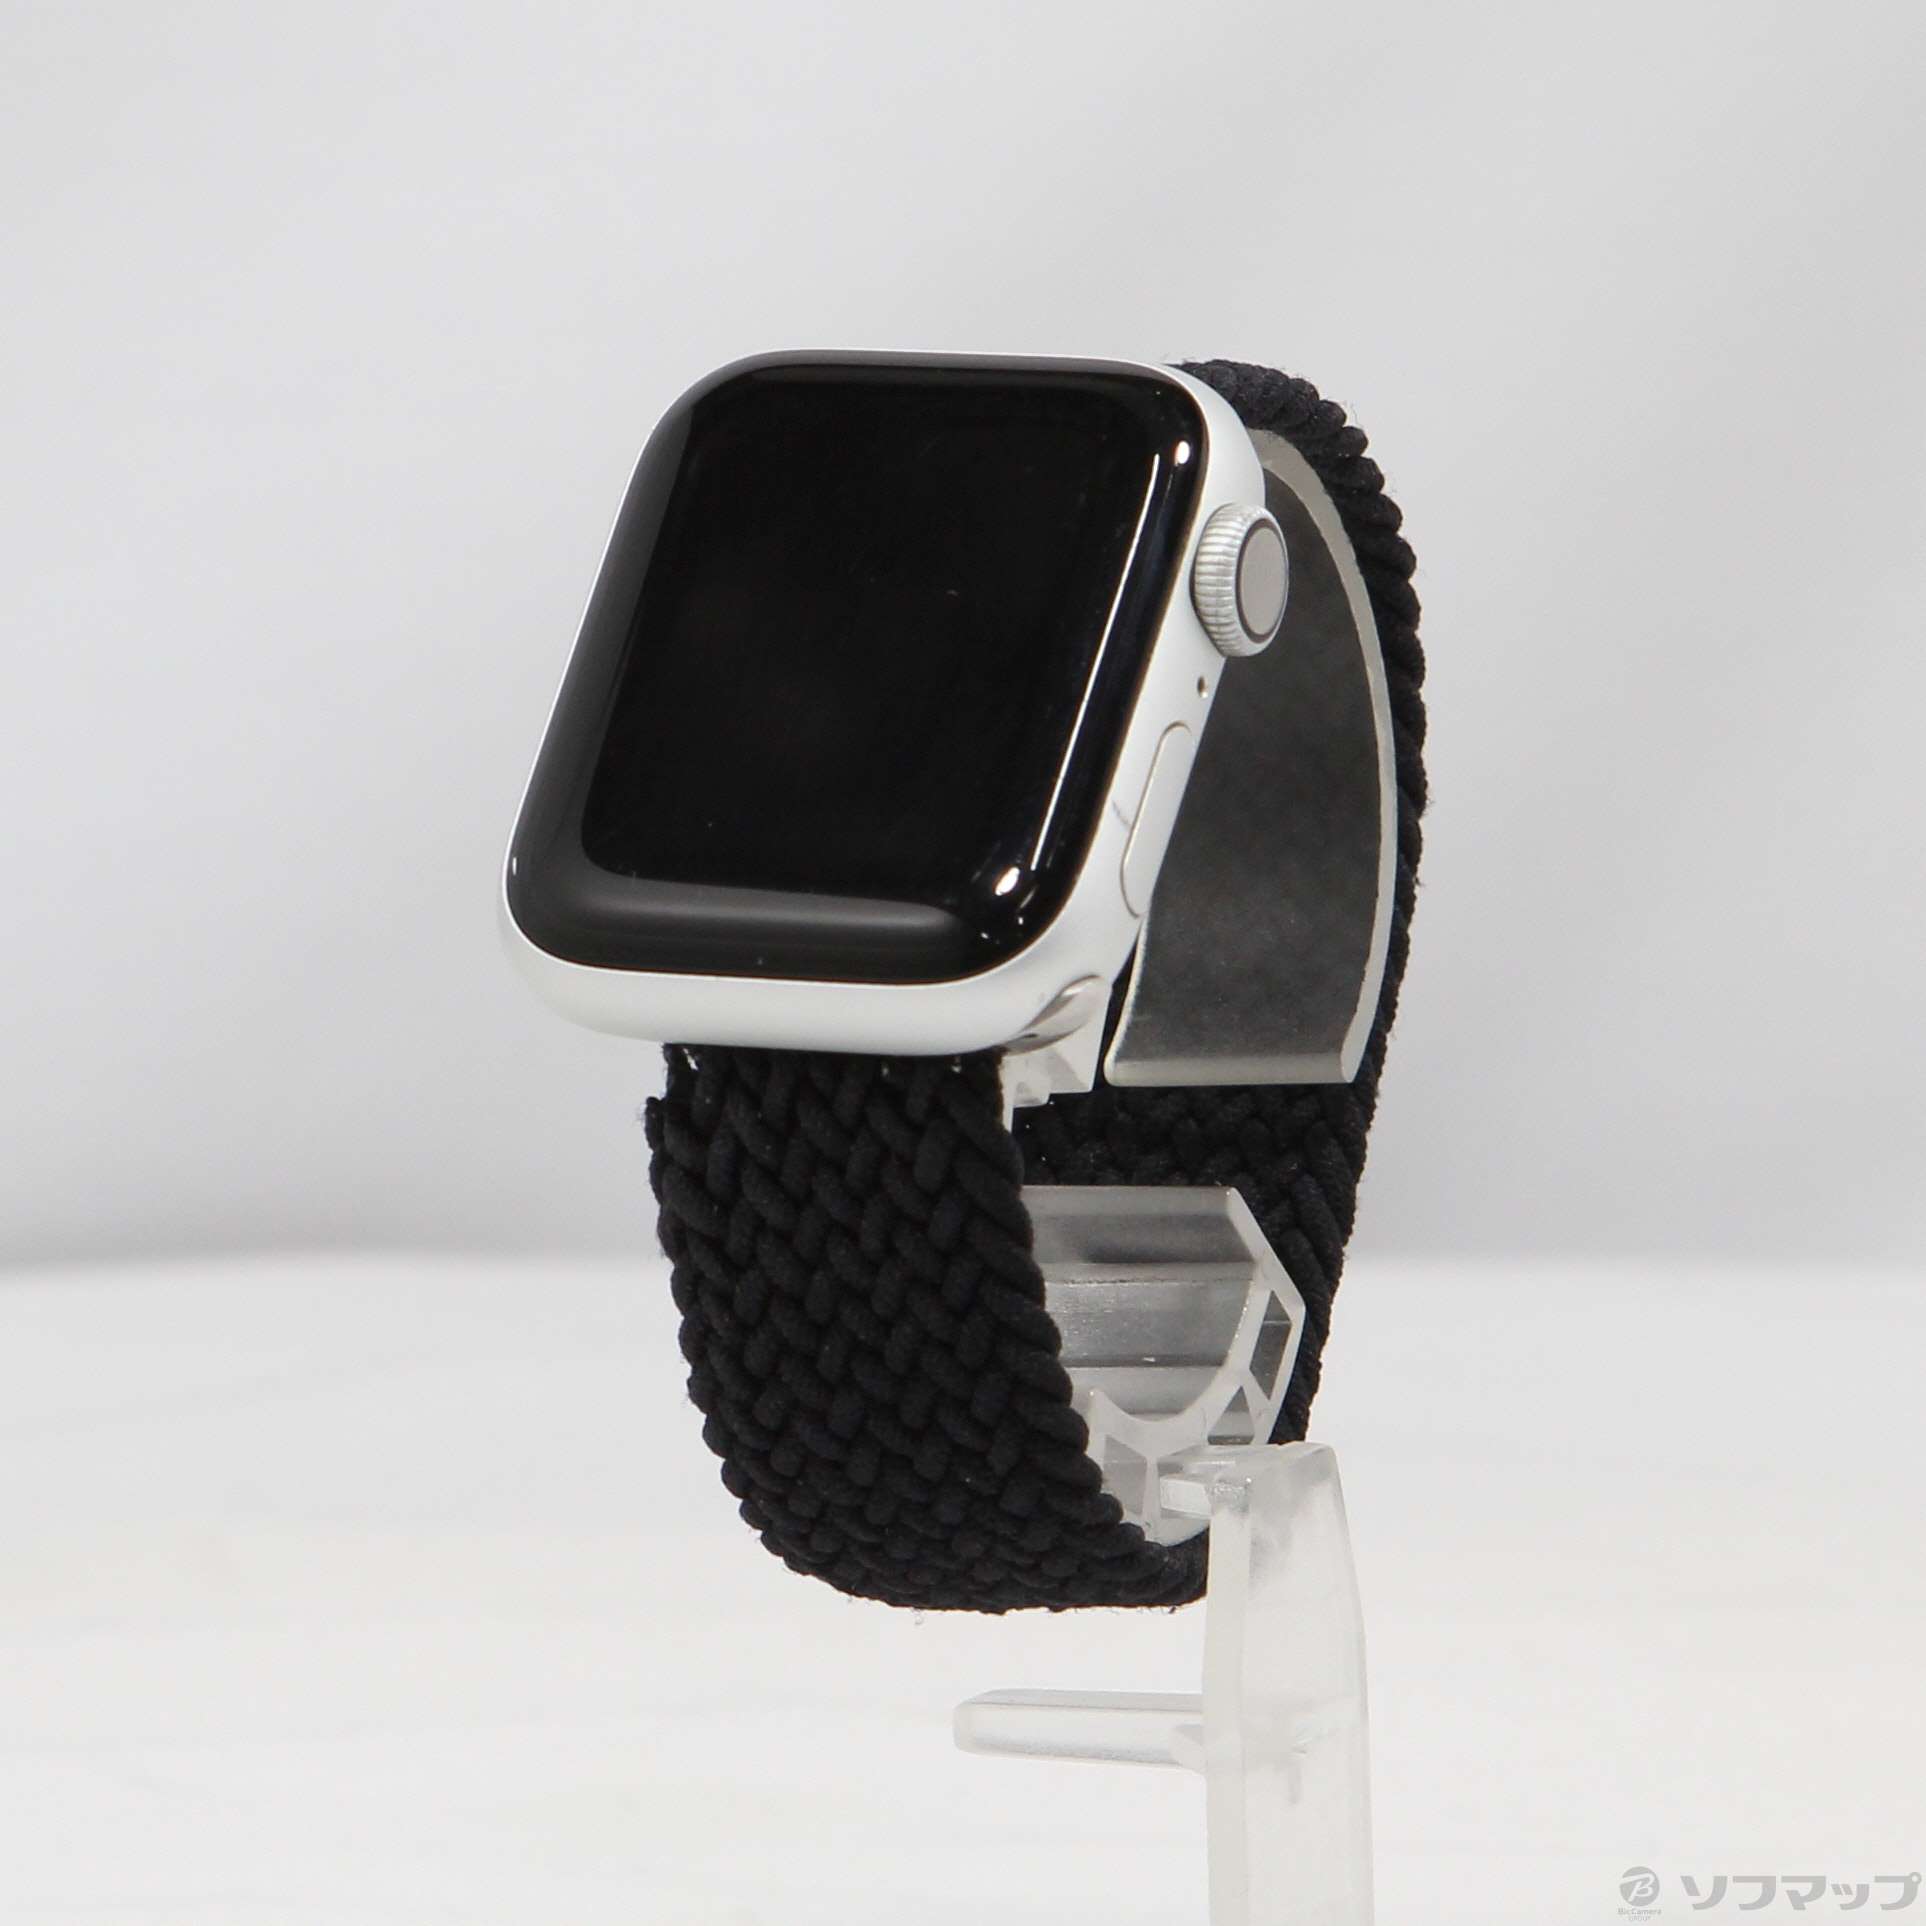 特価最安値Apple Watch 4 本体 GPS 40mm ブラック Apple Watch本体